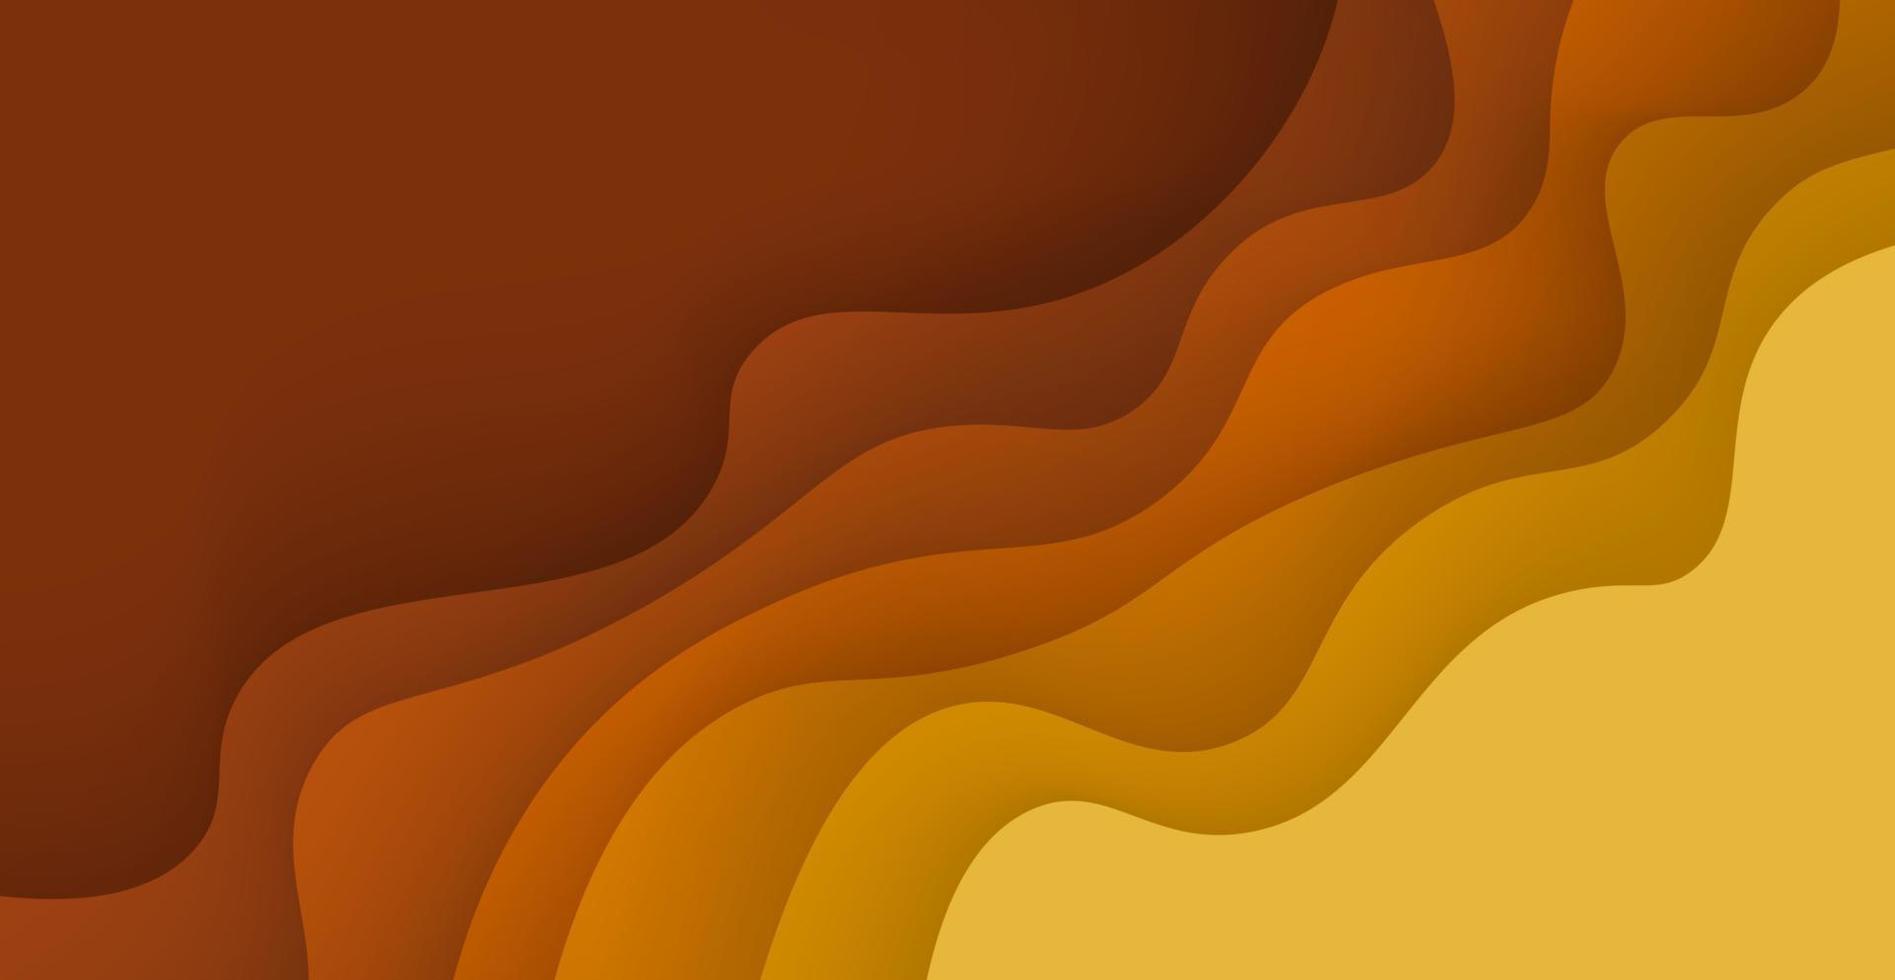 textura de color amarillo de múltiples capas capas de corte de papel 3d en banner de vector degradado. diseño de fondo de arte de corte de papel abstracto para plantilla de sitio web. concepto de mapa topográfico o corte de papel de origami suave